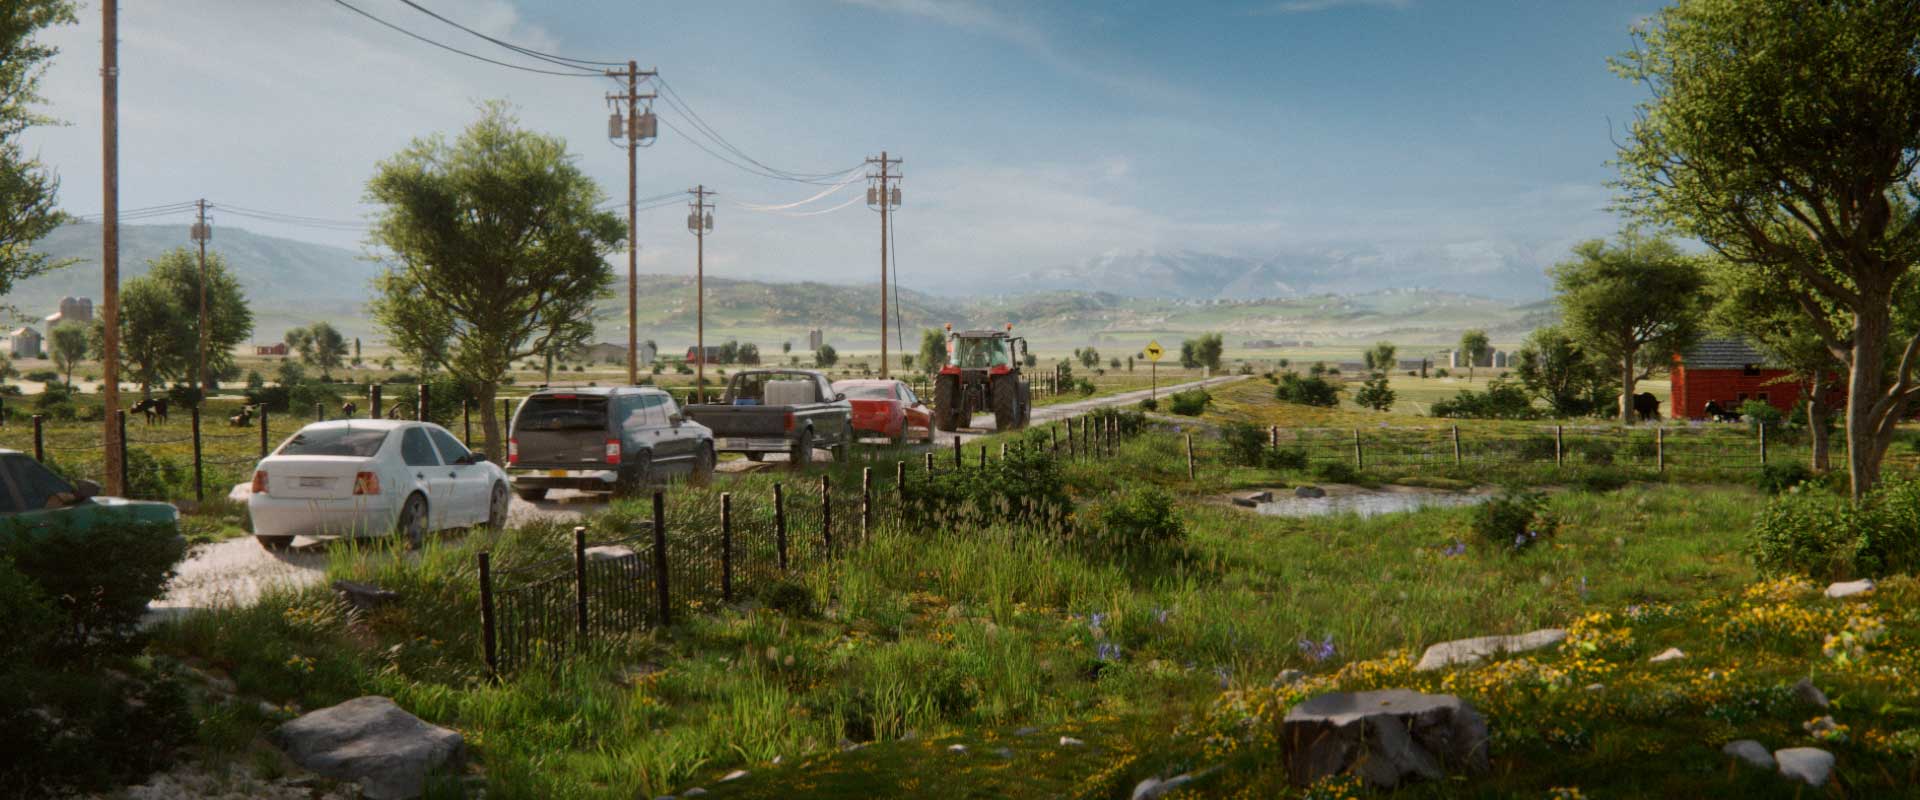 NYX Game Awards - Farming Simulator 22 Cinematic Trailer